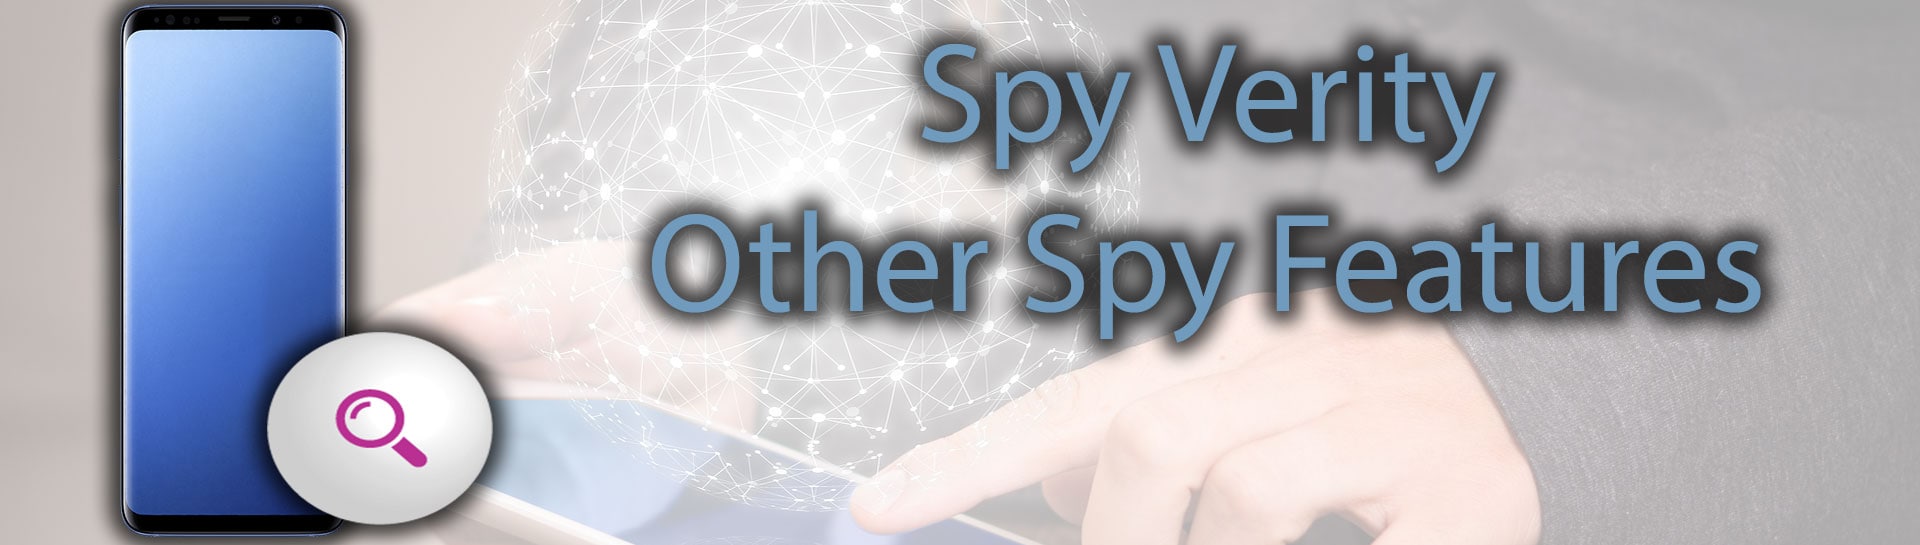 spy verity features